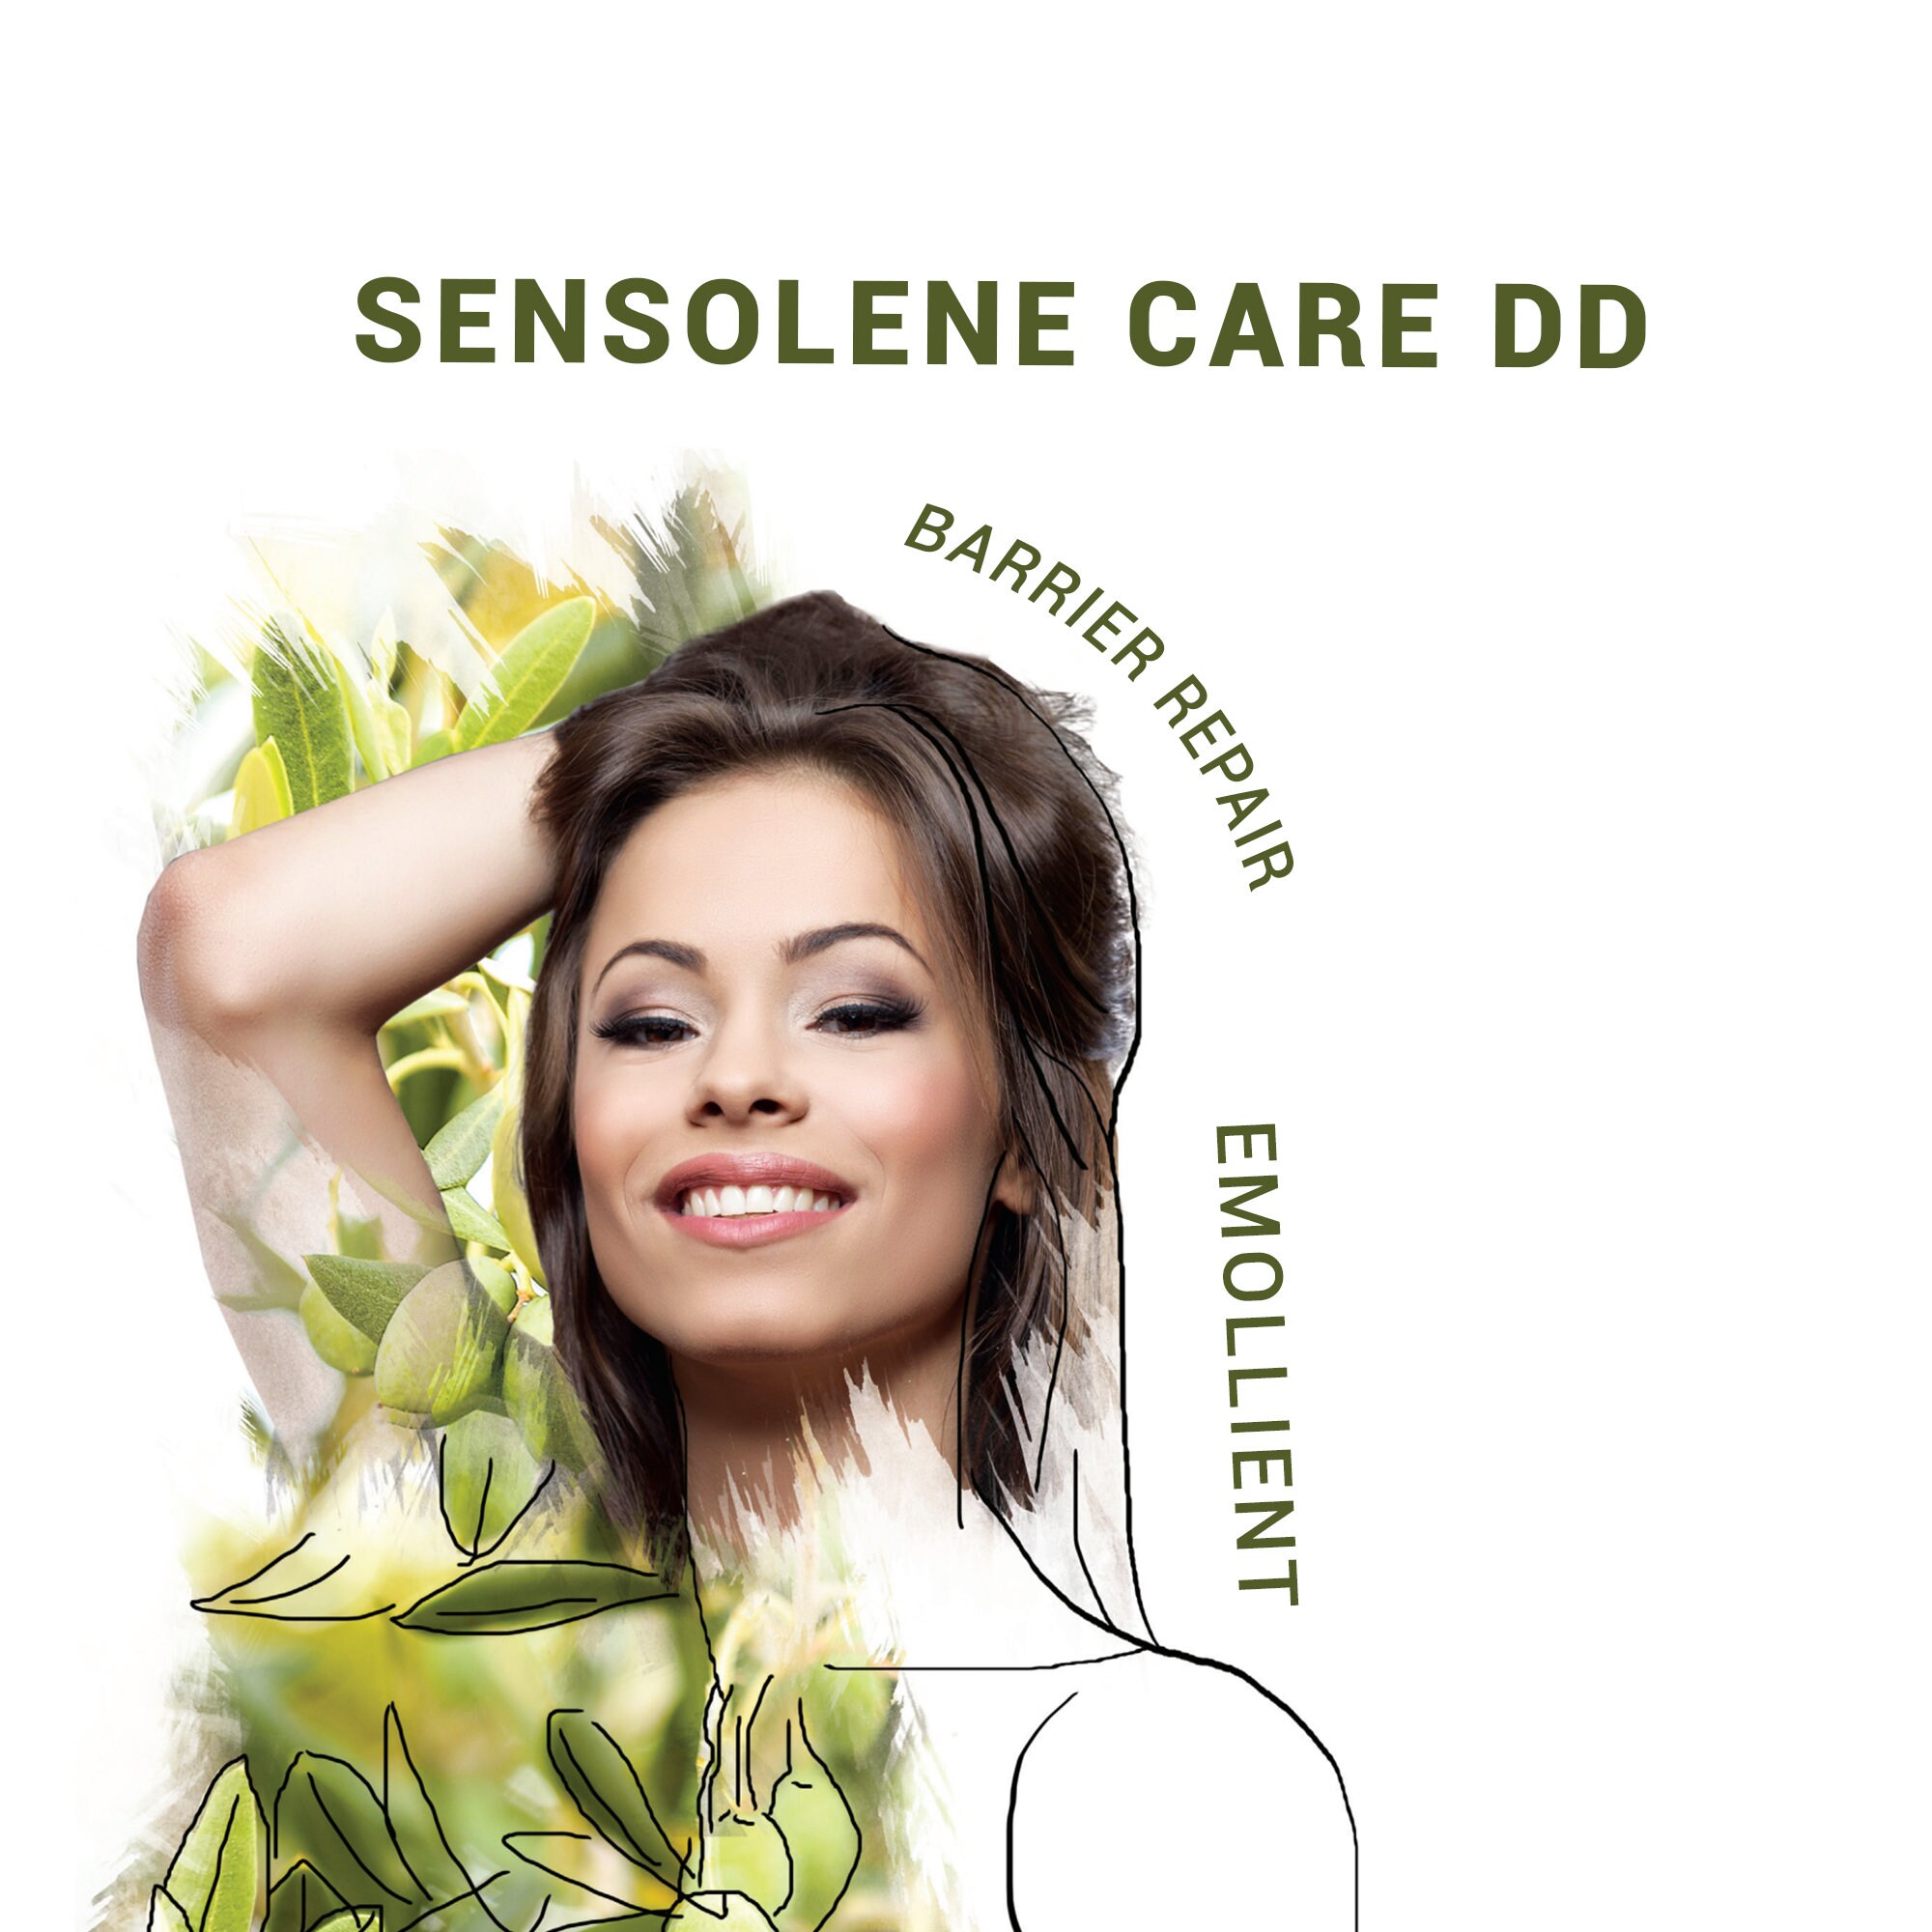 Soupline S-linge Softness & care wholesaler